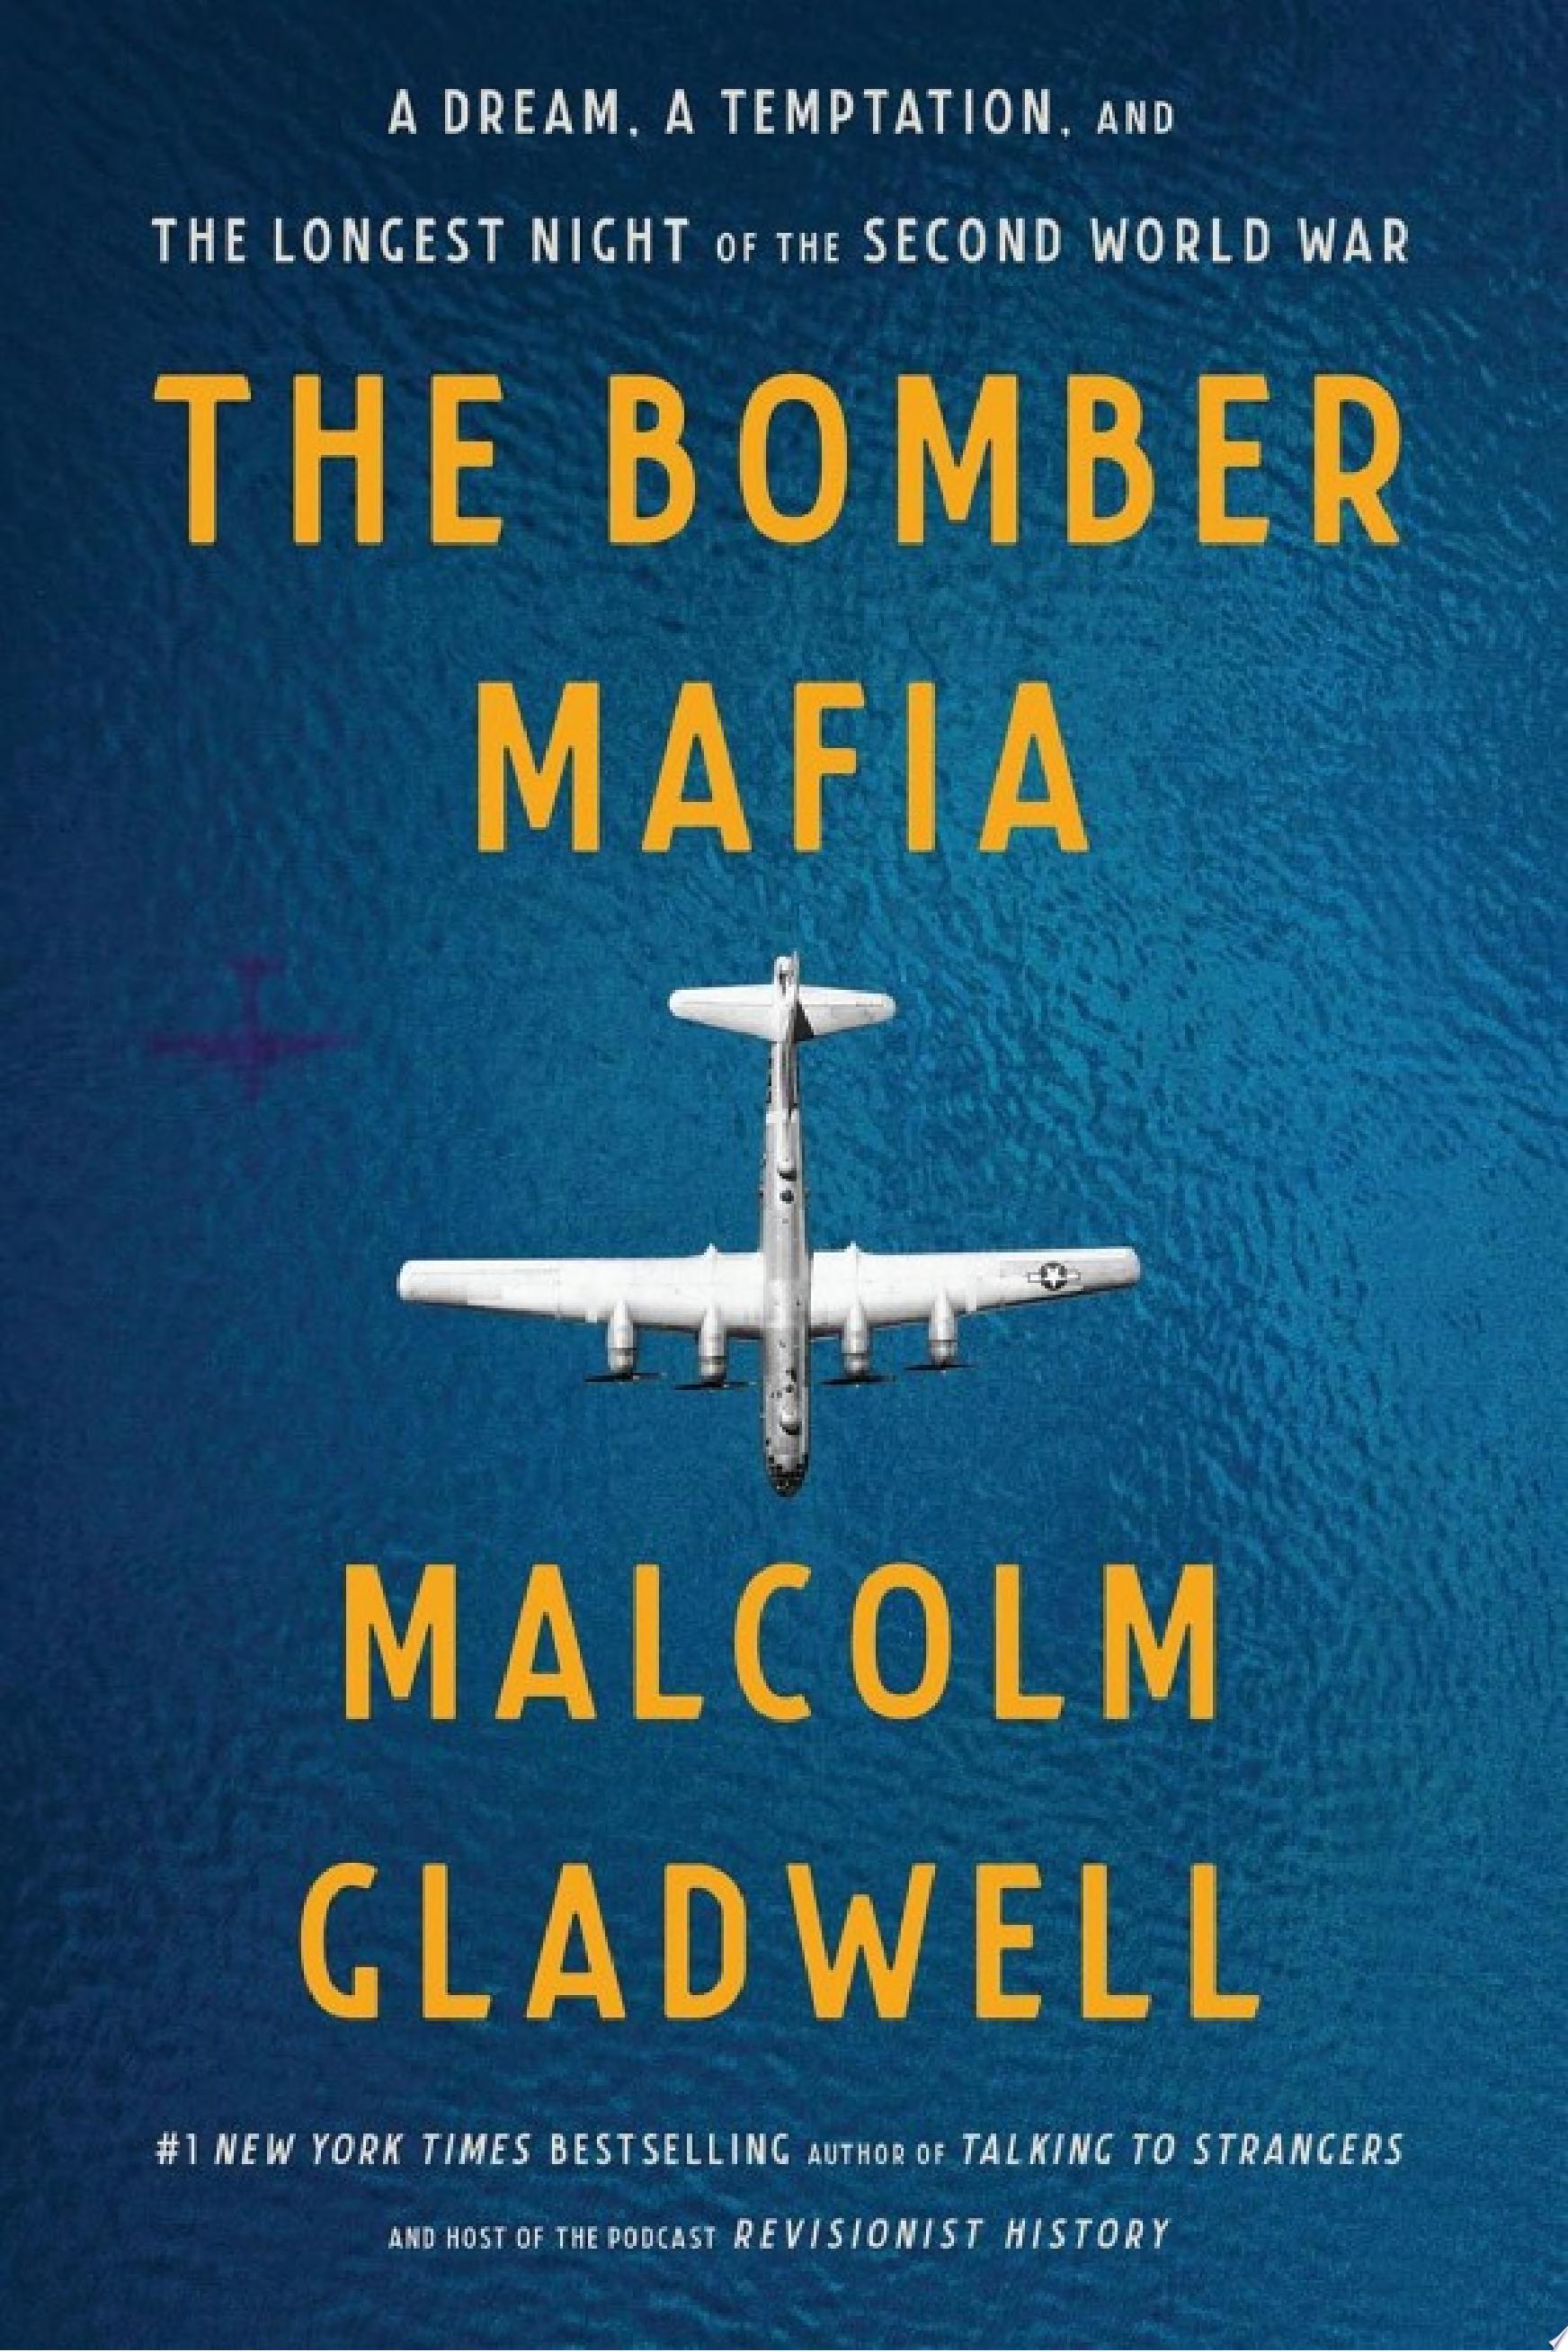 Image for "The Bomber Mafia"